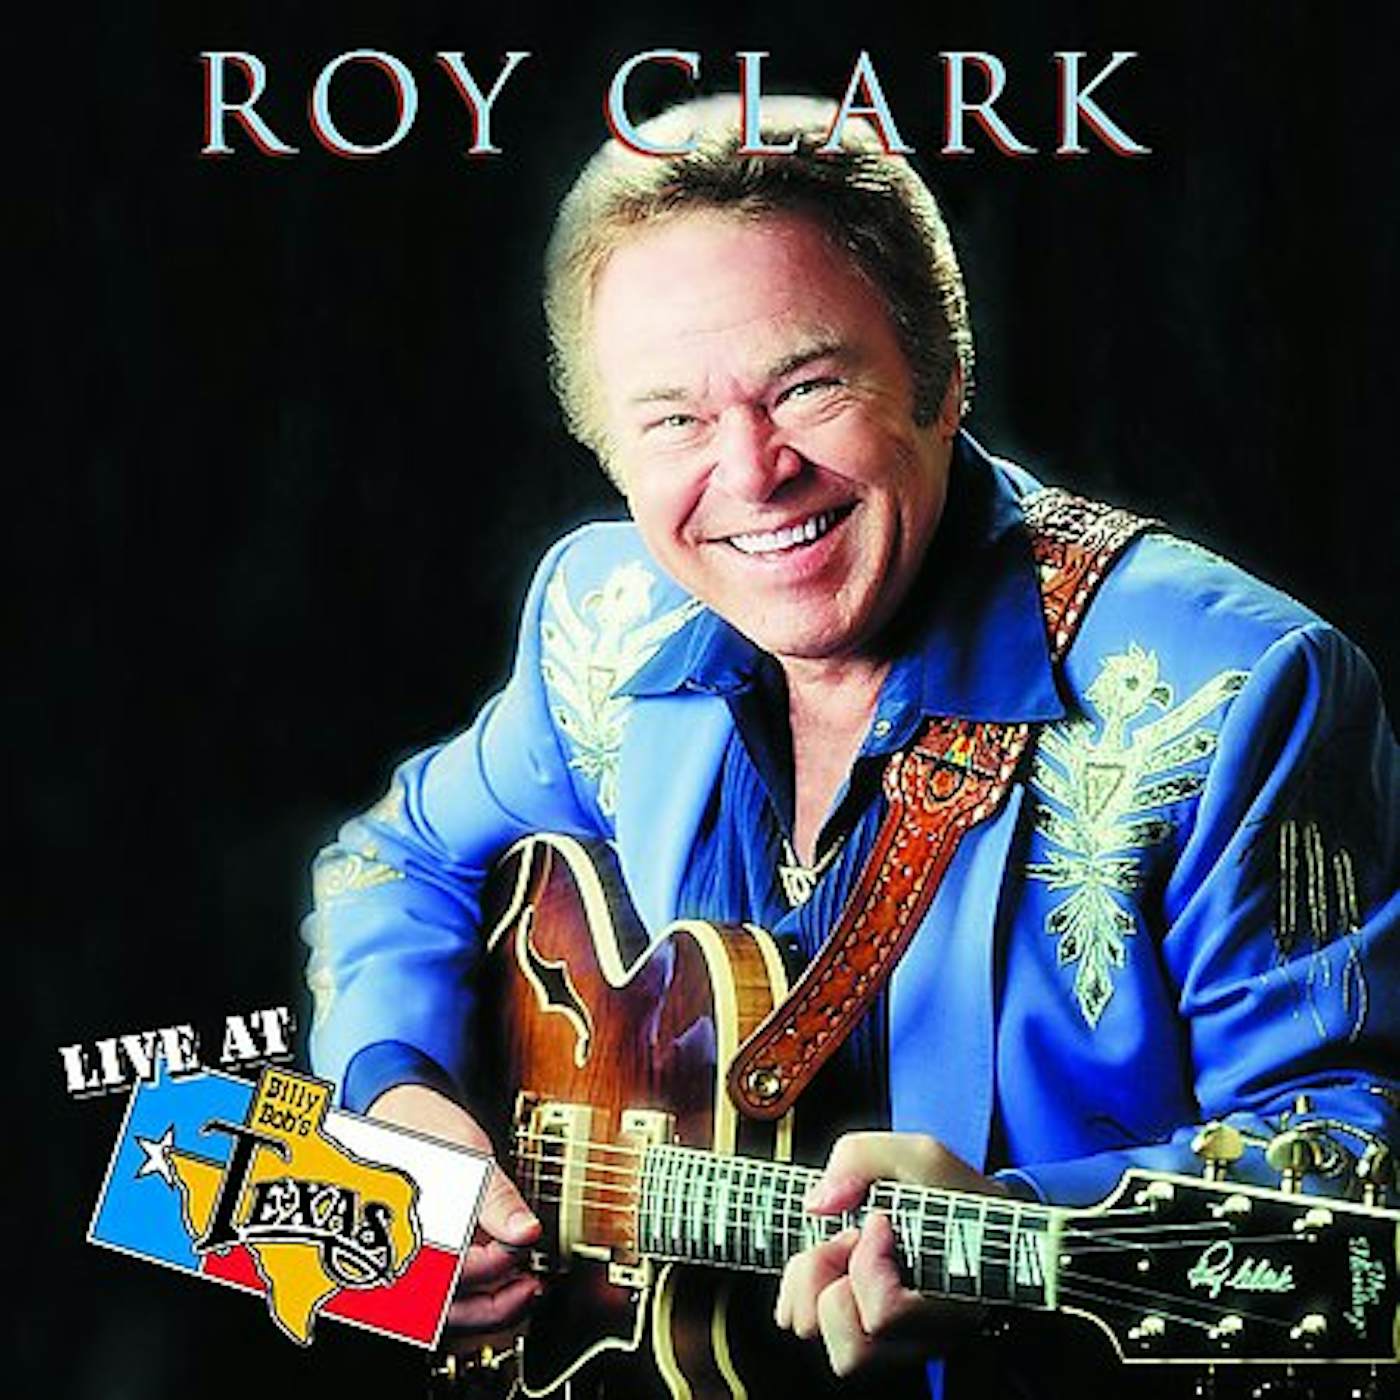 Roy Clark LIVE AT BILLY BOB'S TEXAS CD